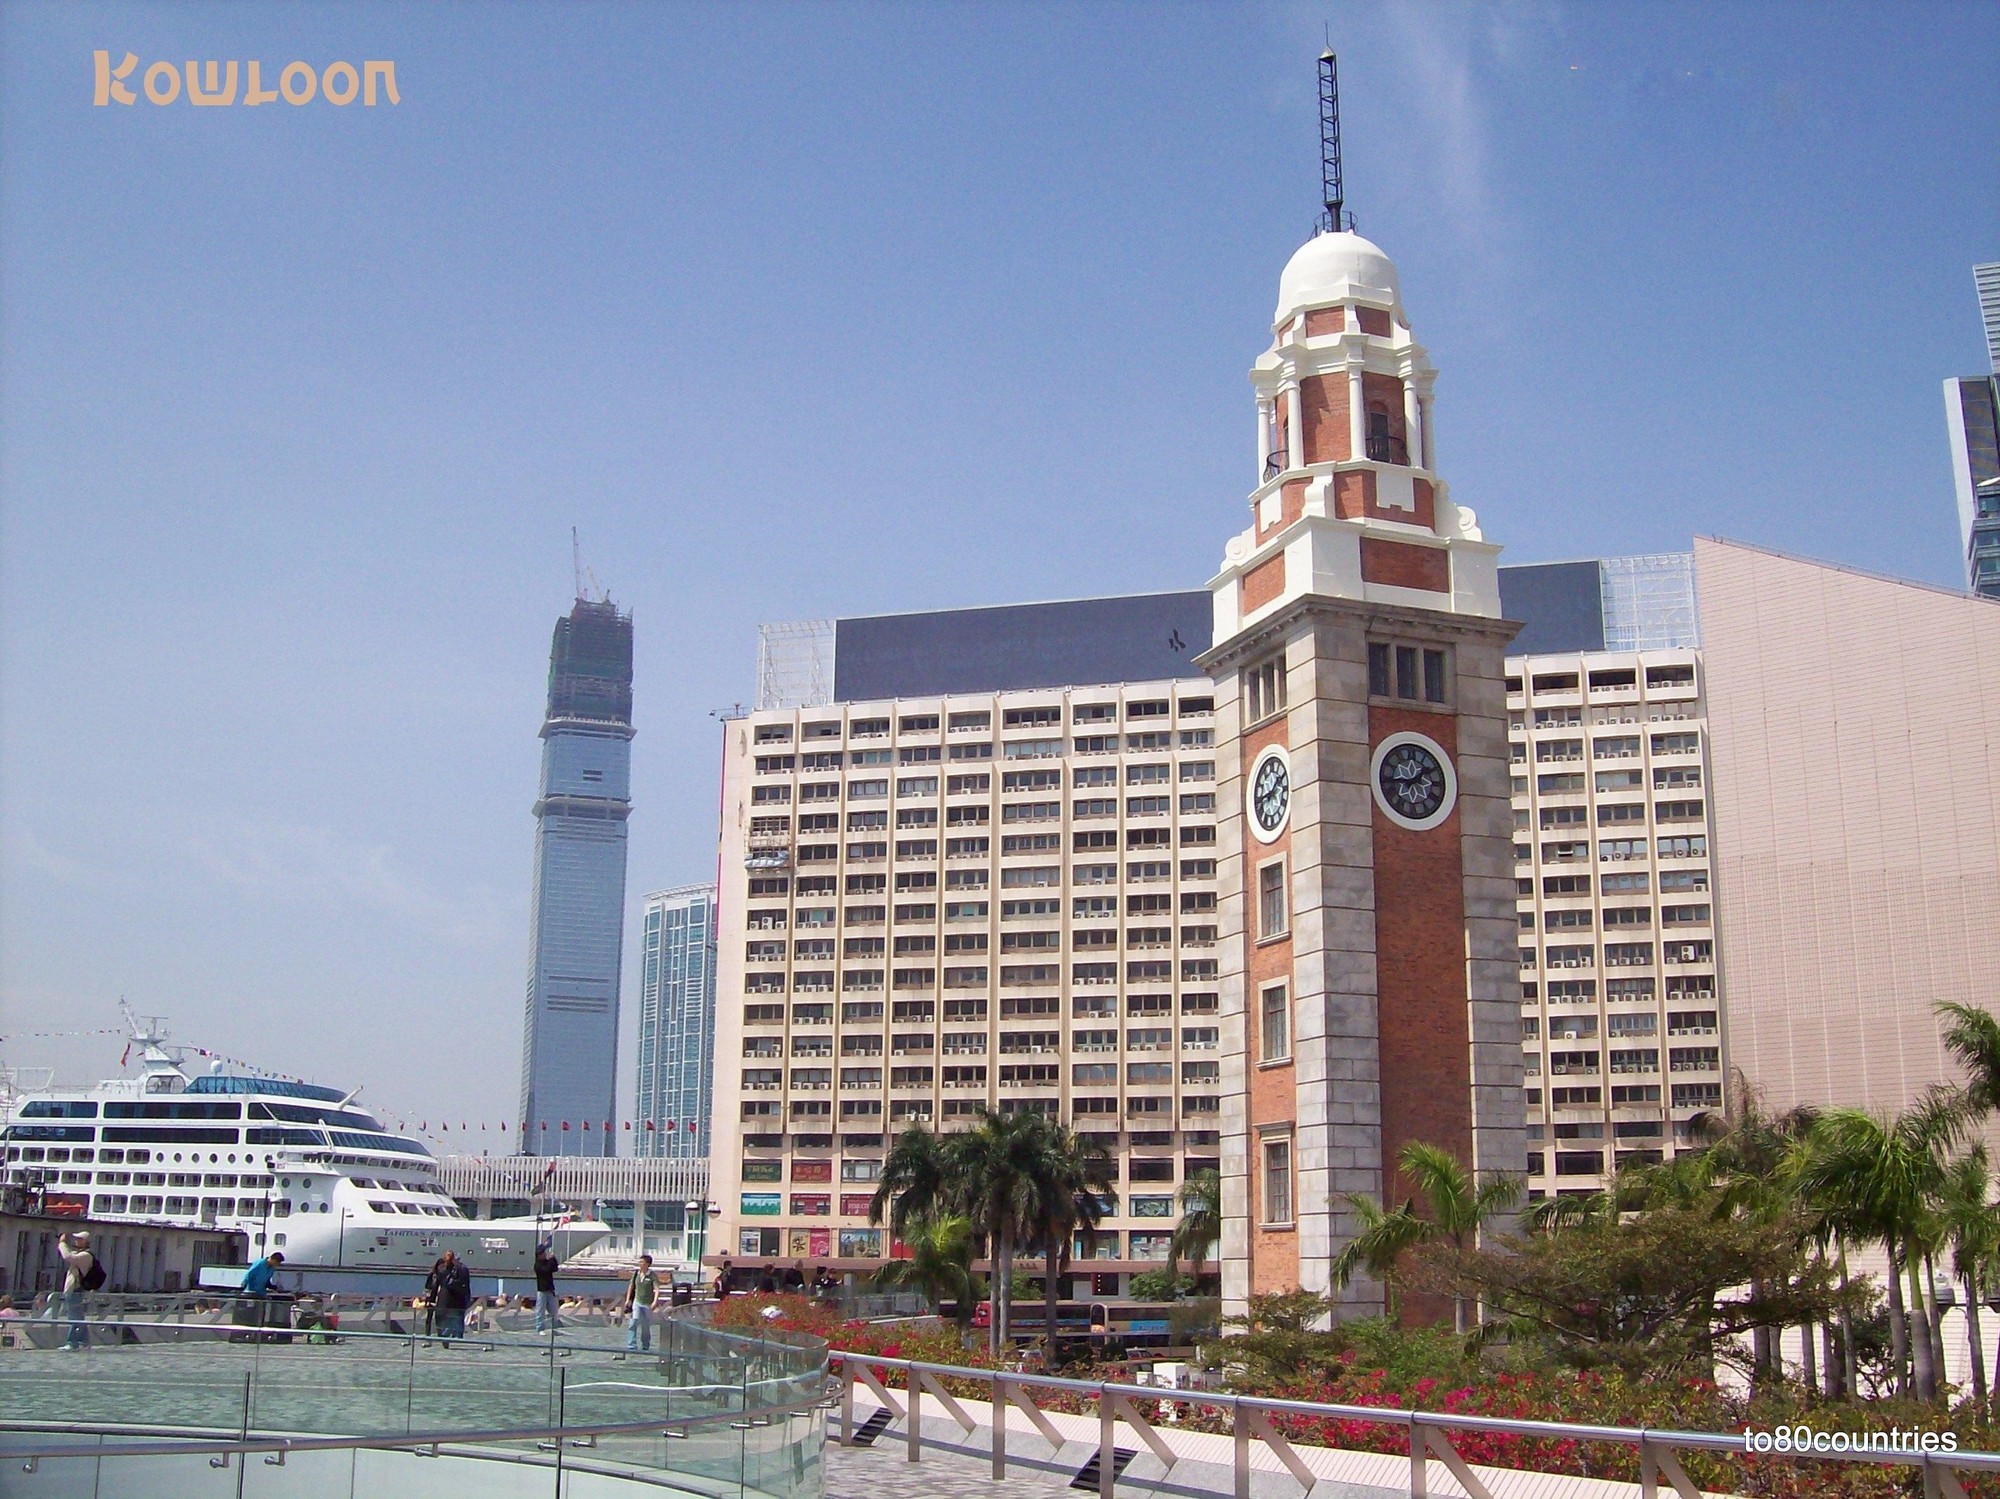 Clock Tower - Kowloon